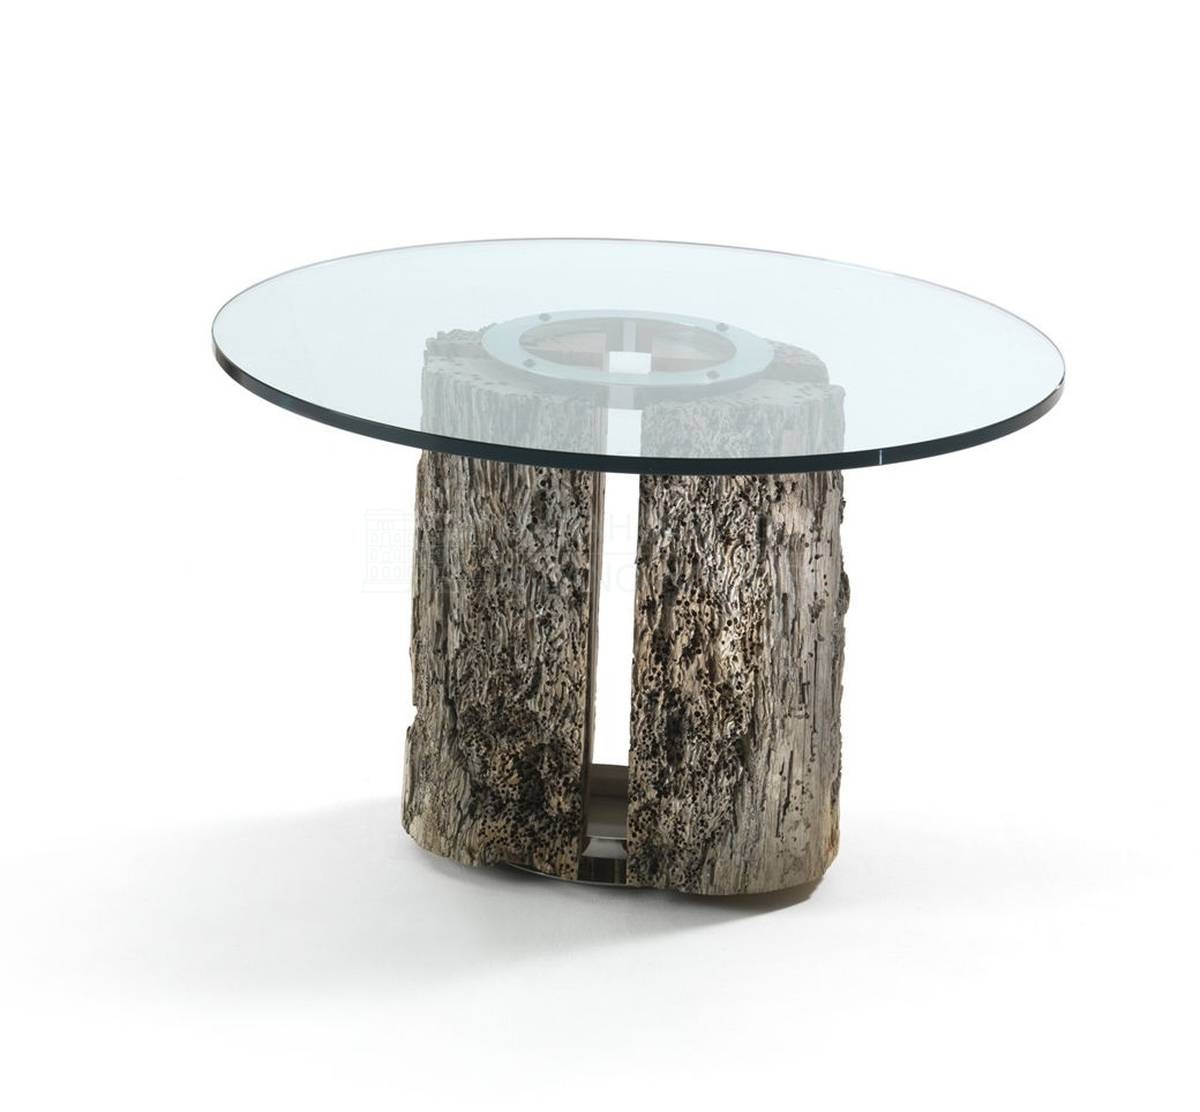 Кофейный столик Vice/small table из Италии фабрики RIVA1920